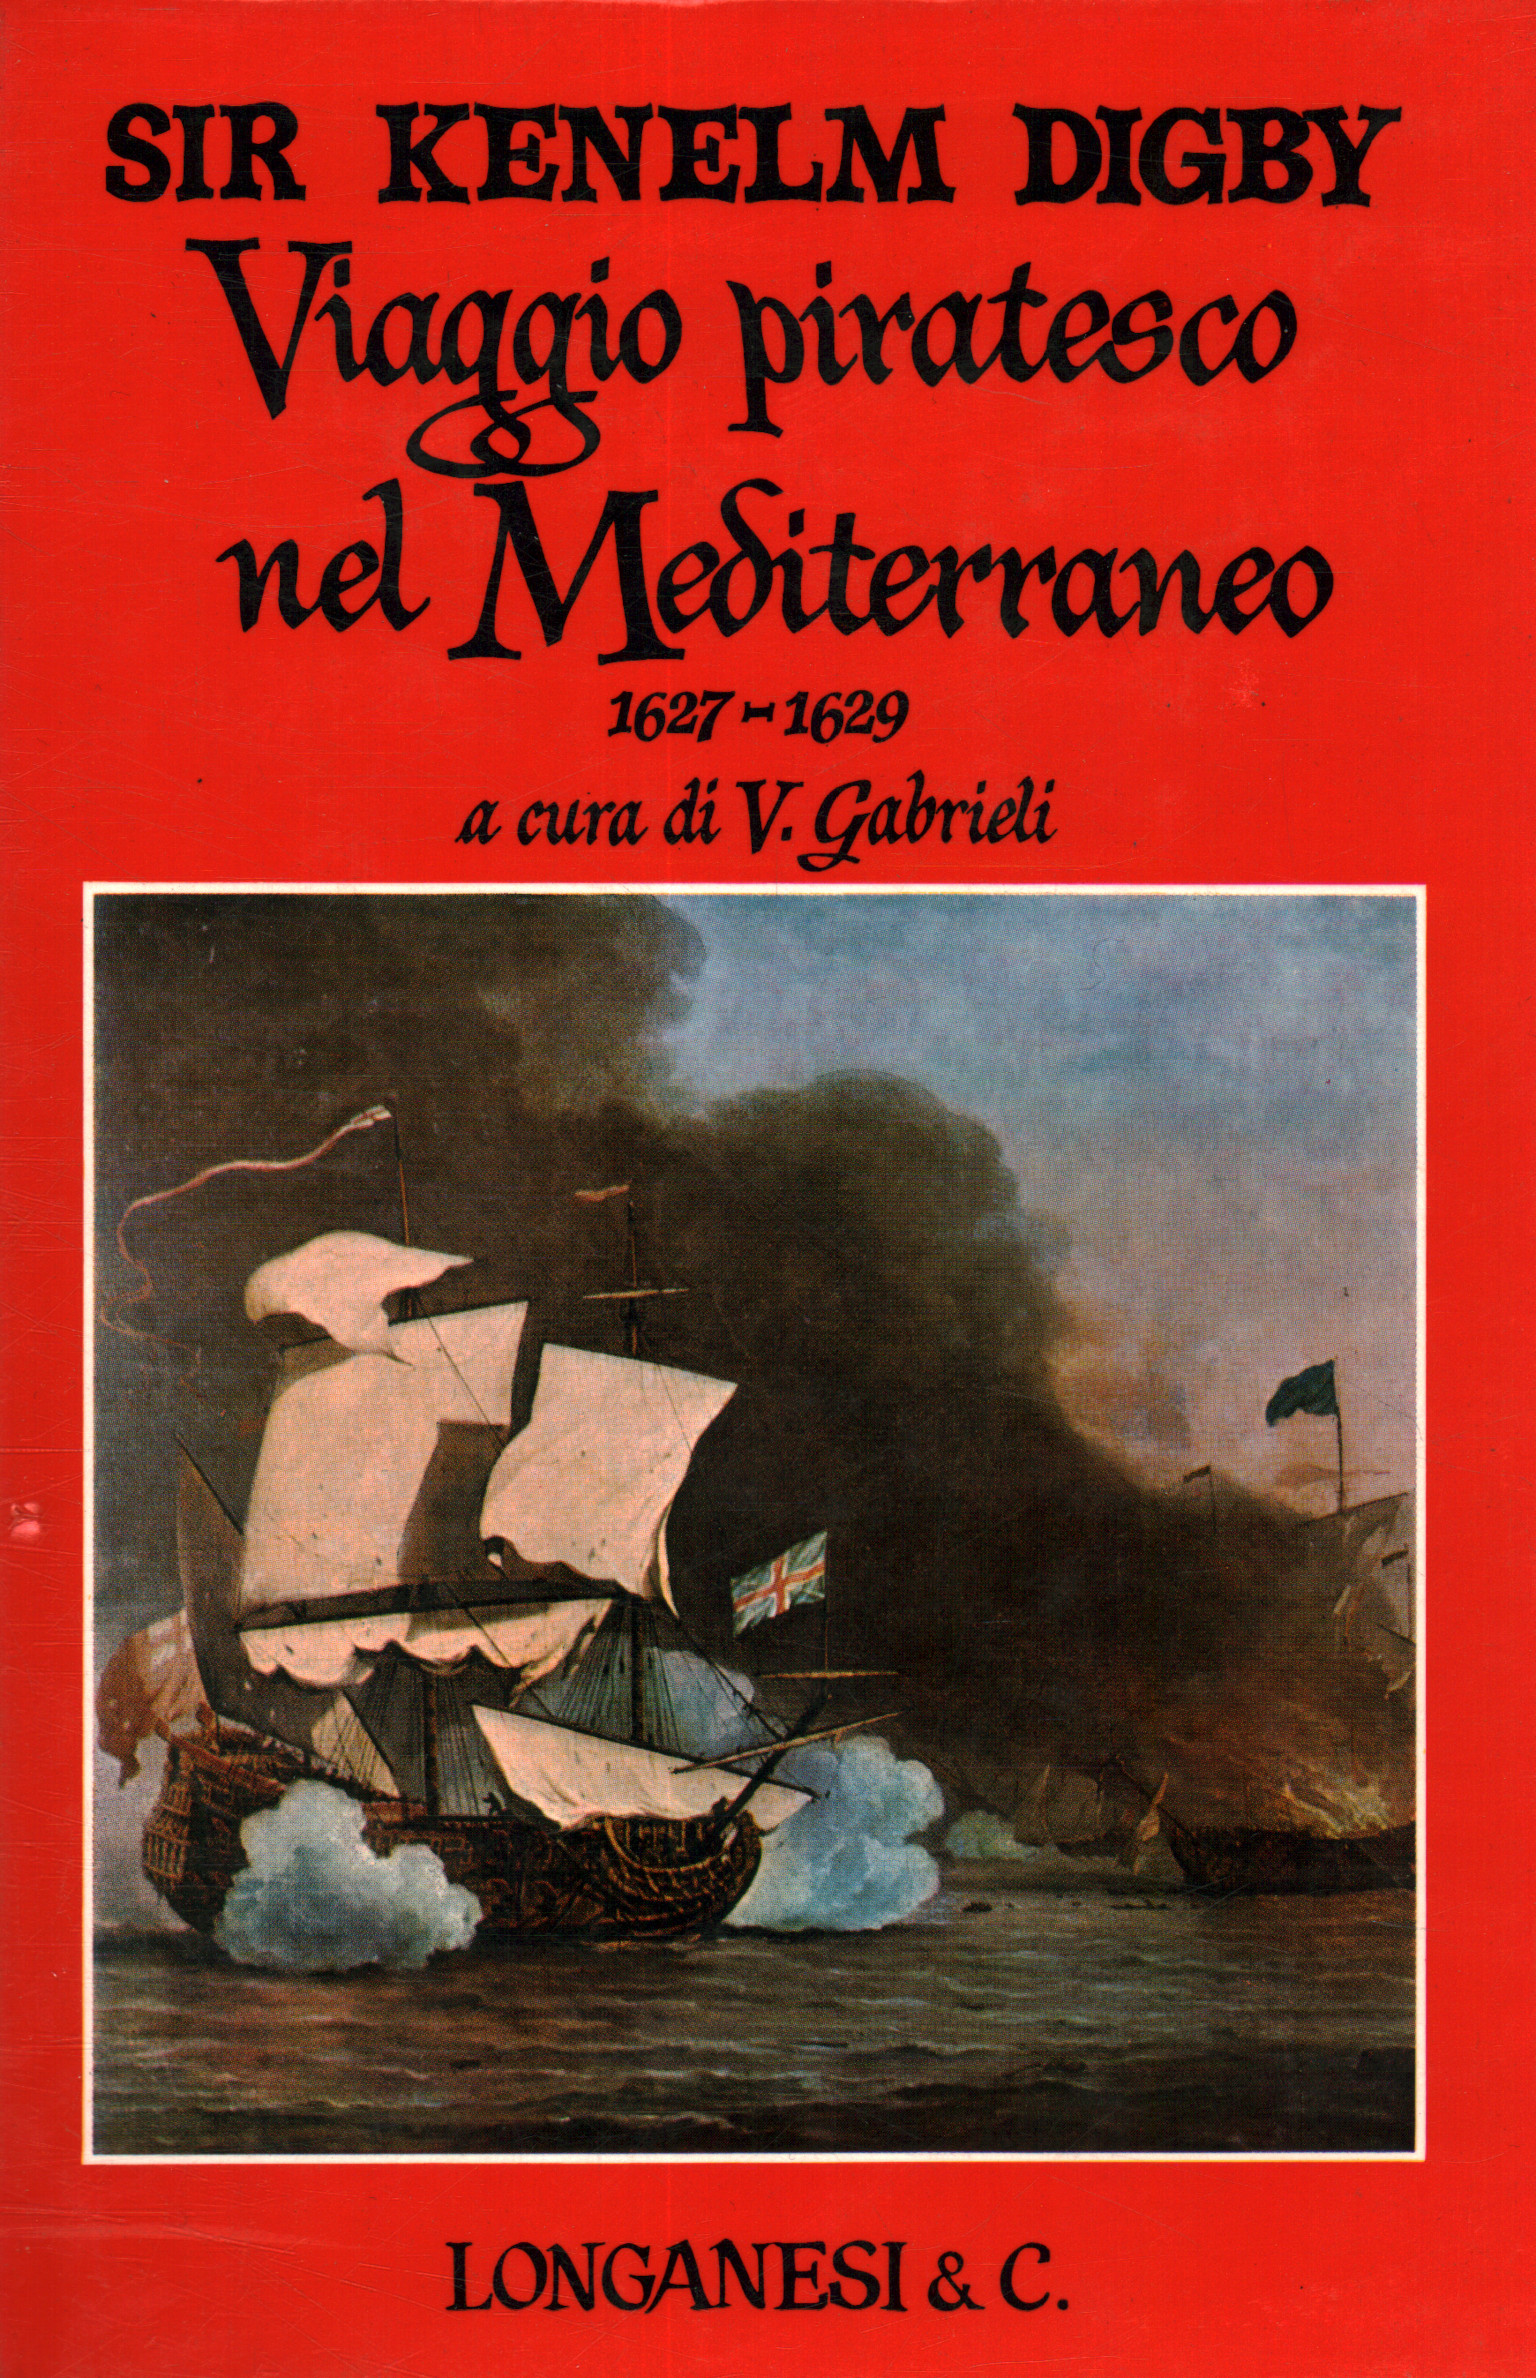 Voyage pirate en Méditerranée 1627-16